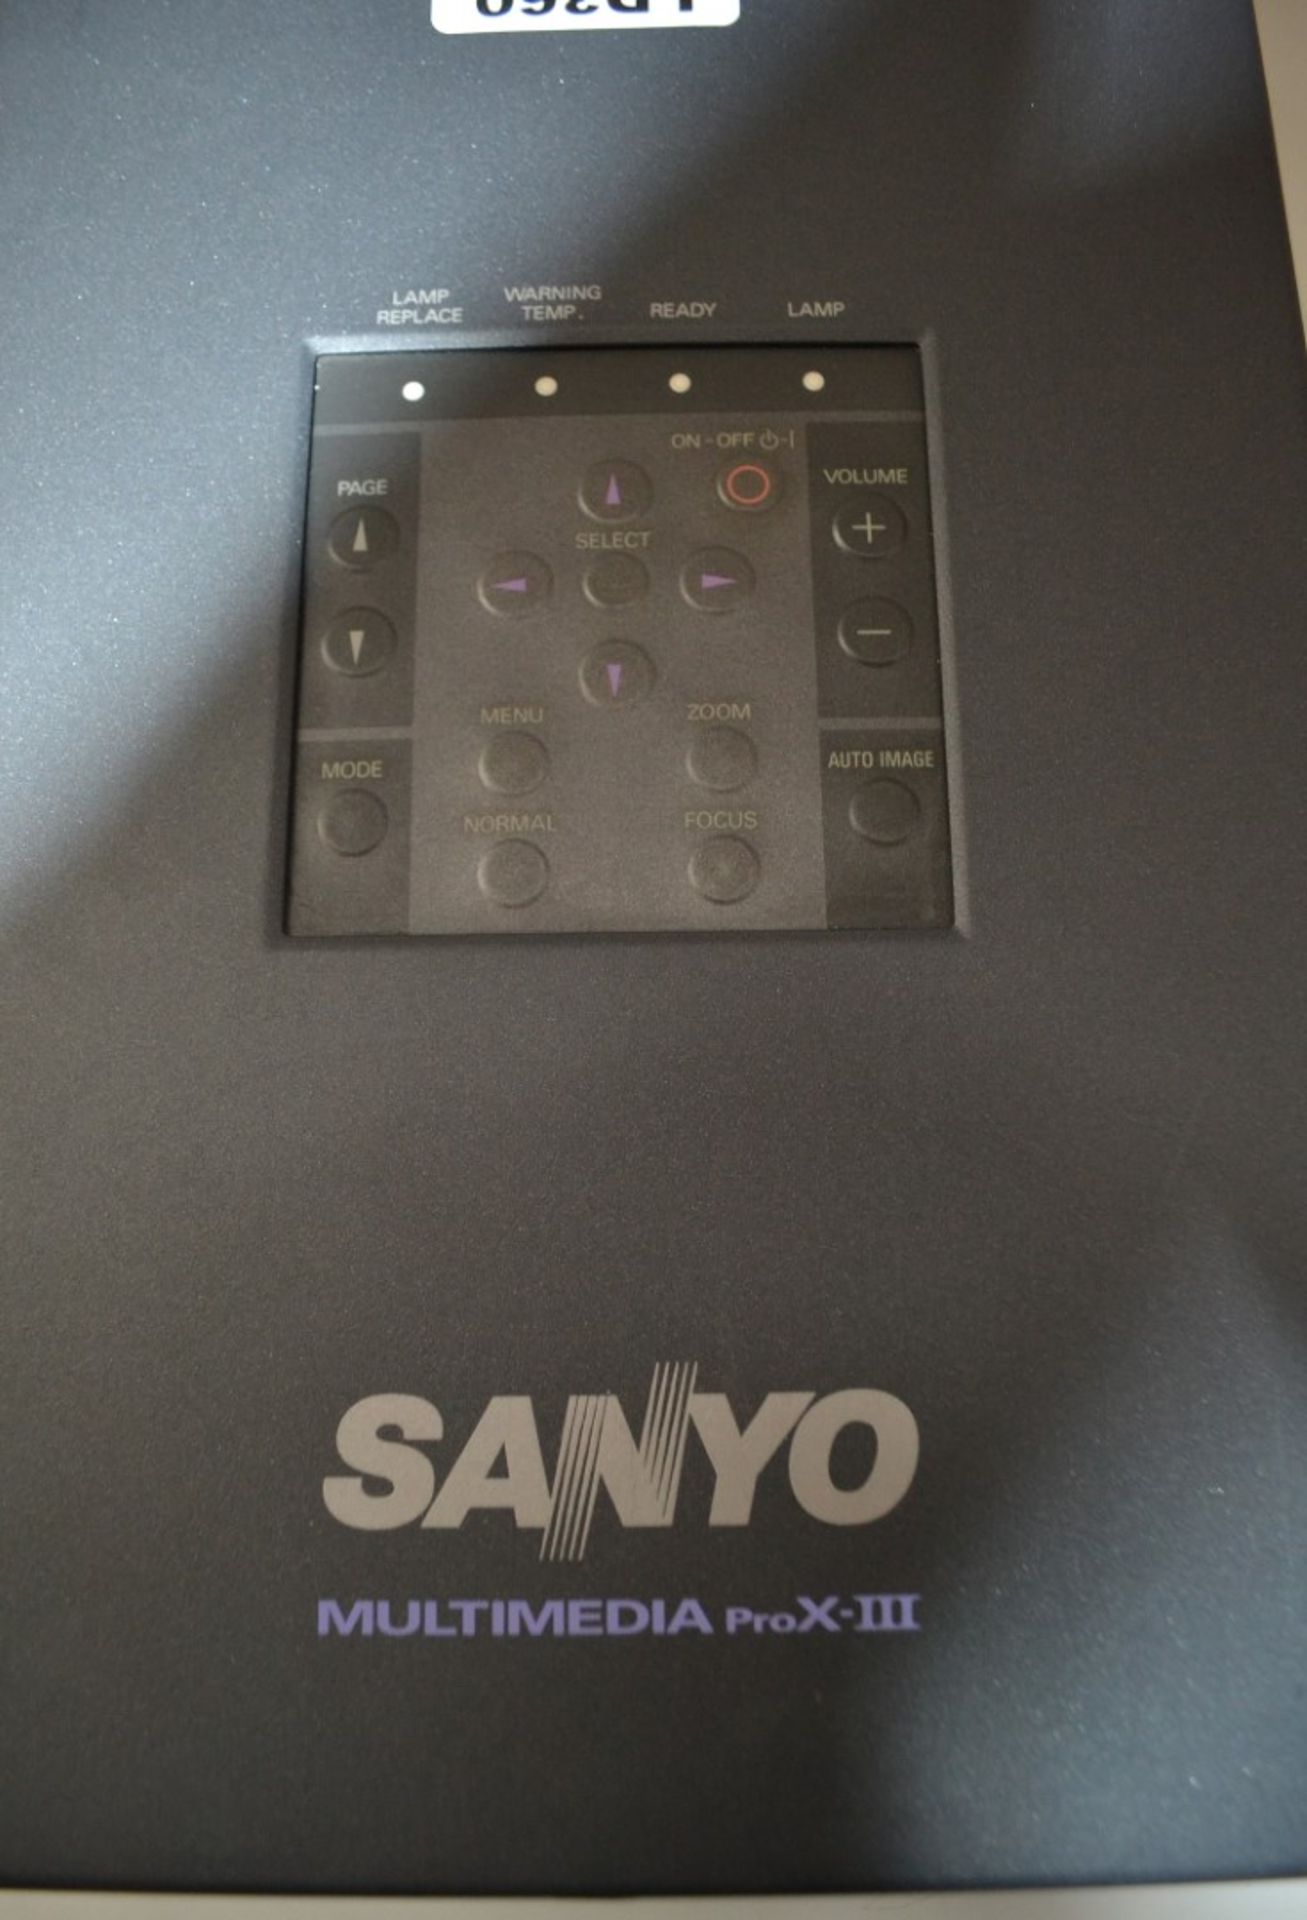 1 x Sanyo Multimedia Projector Pro X III - Ref: LD360 - CL409 - Altrincham WA14 - Image 4 of 5